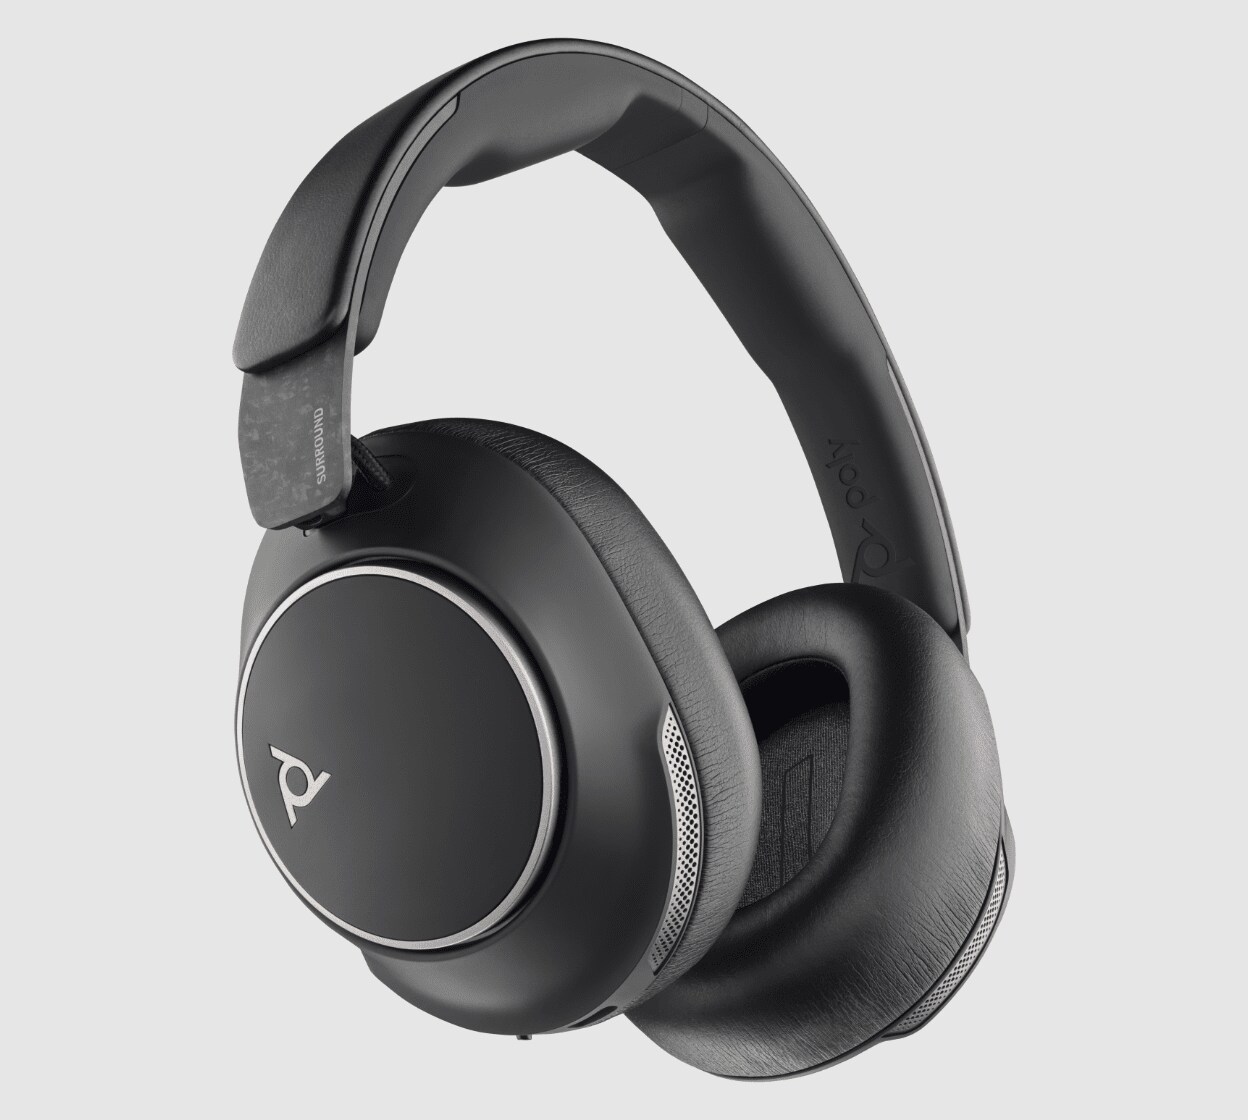 Auricular Bluetooth Voyager Focus UC B825 Pro Plantronics Poly - 202652-01  - Promart